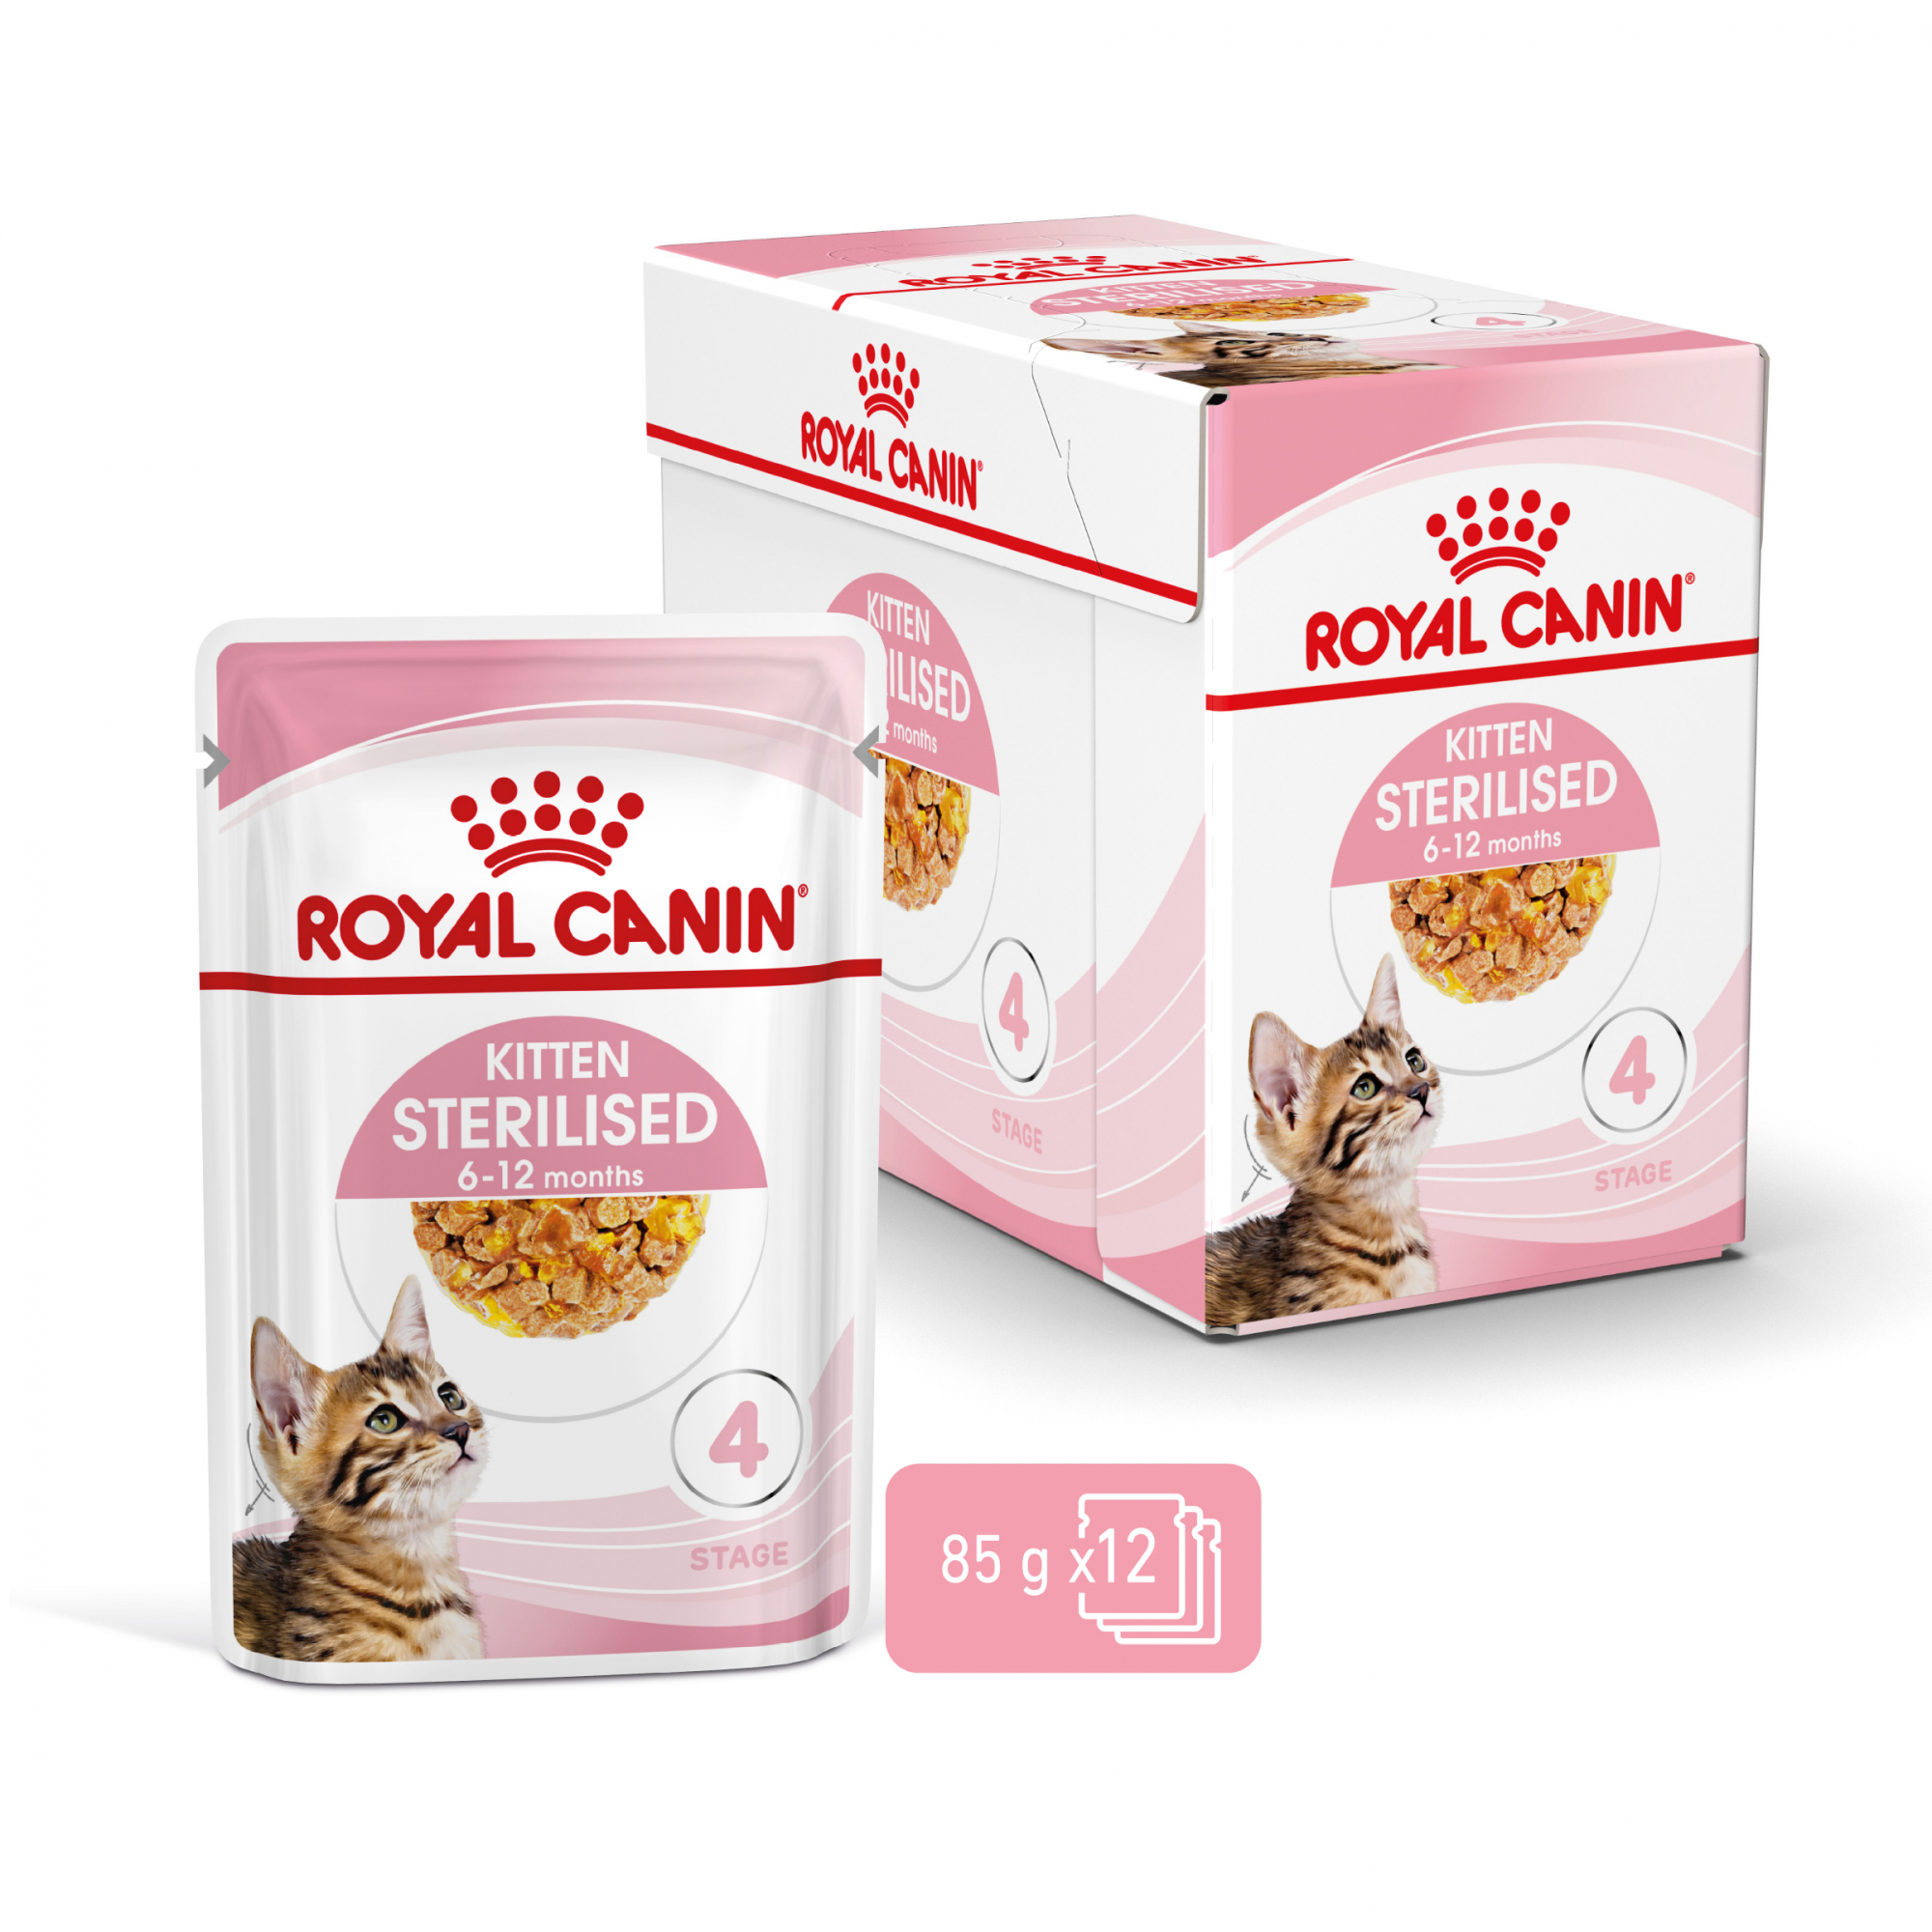 Royal Canin Kitten sterilised - alimento húmido em gelatina para gatinho